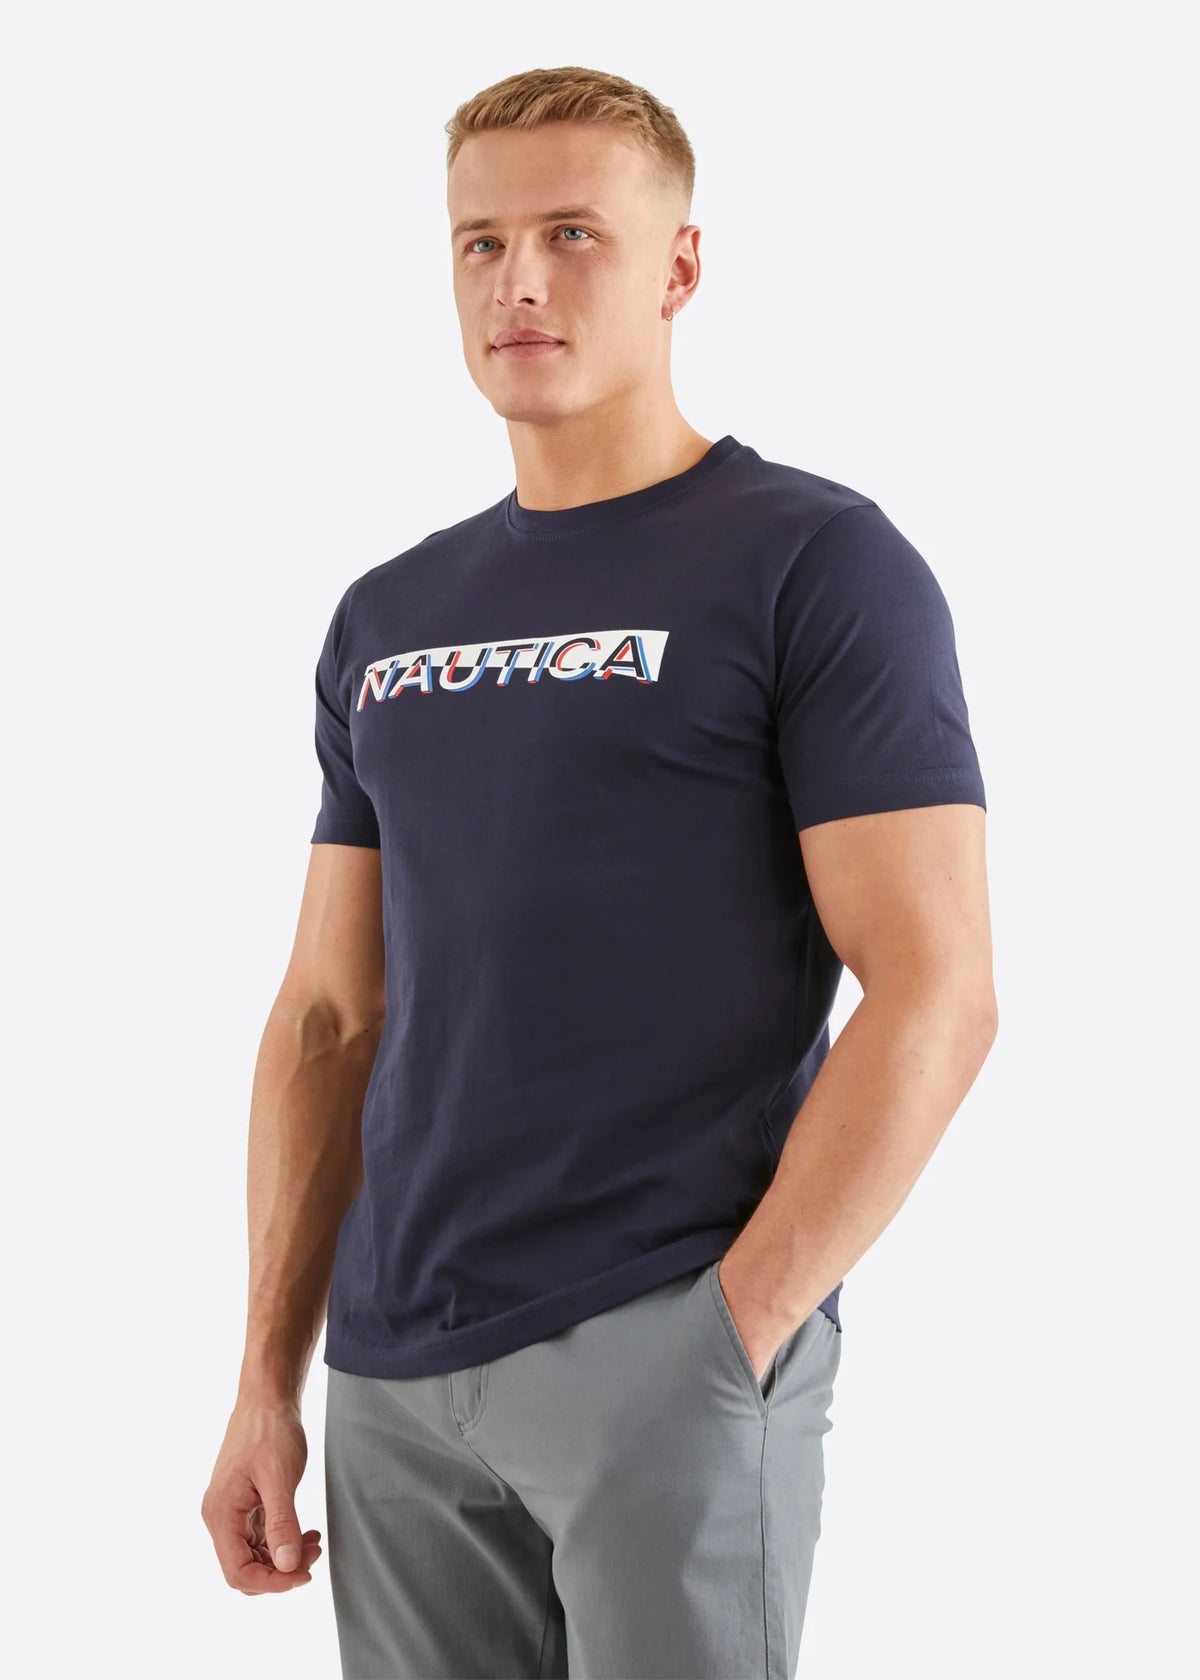 Nautica Dane T-Shirt